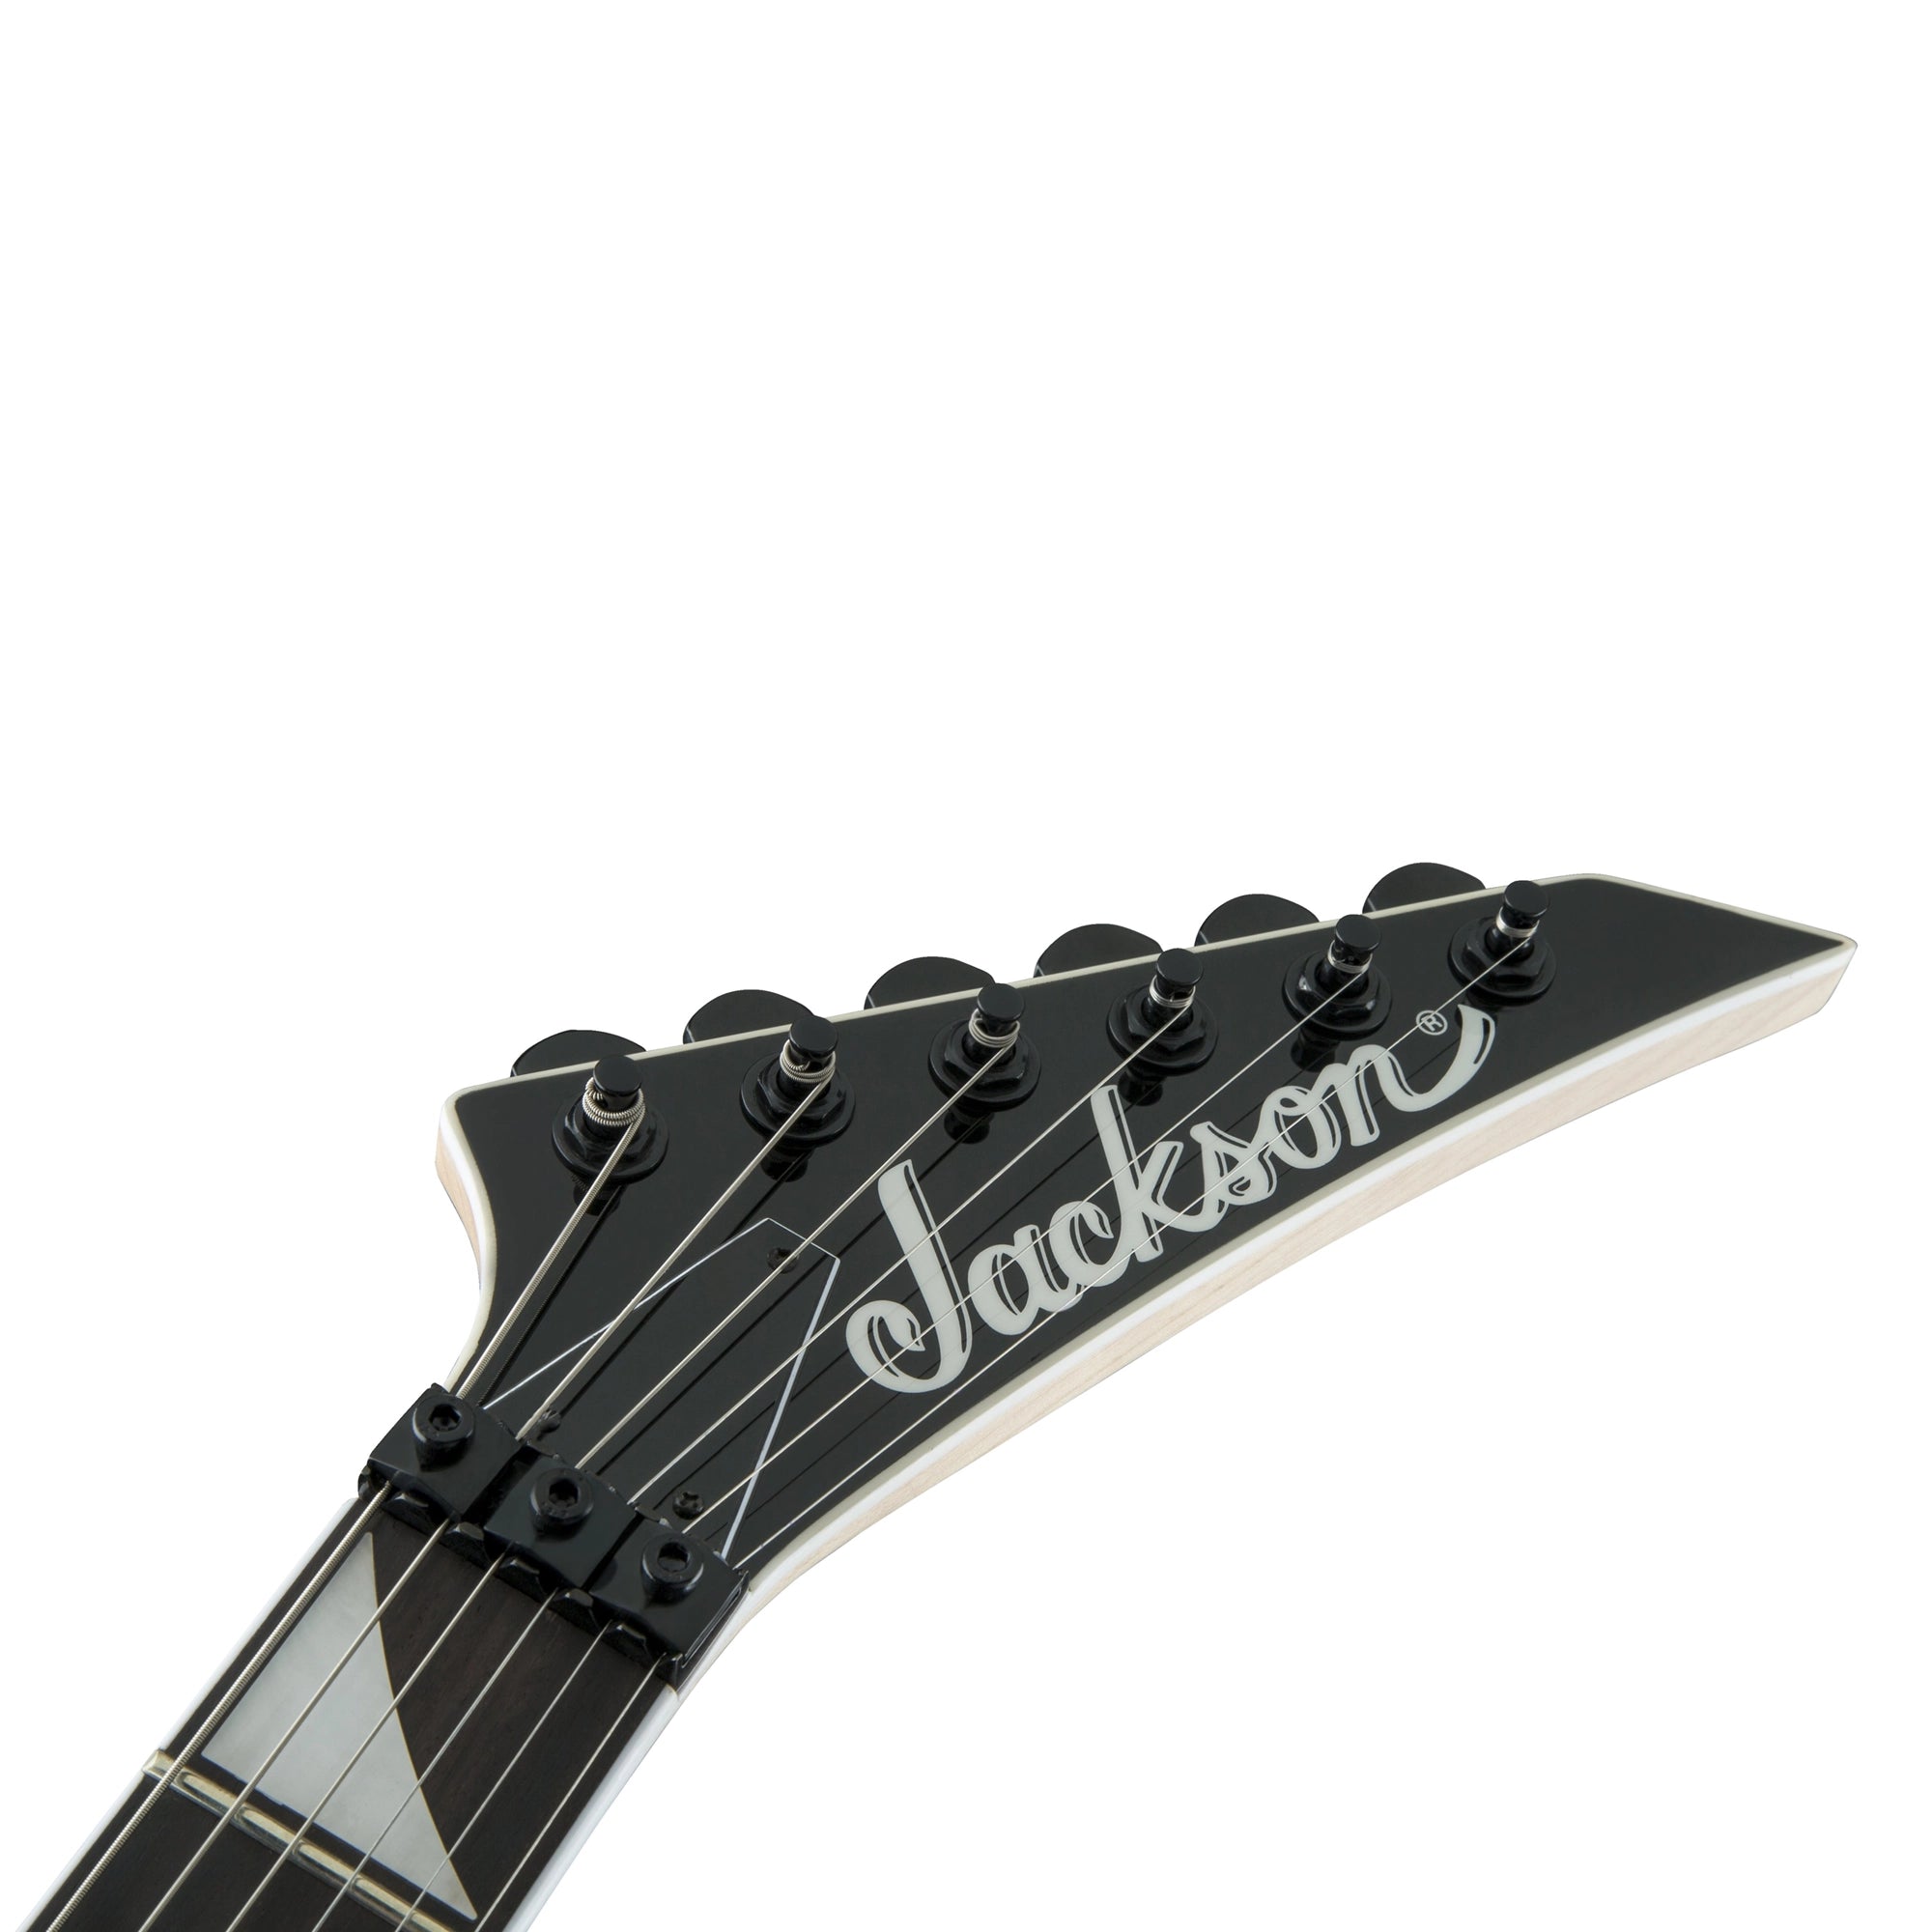 Jackson Dinky Arch Top JS32Q Dka Electric Guitar - Transparent Blue